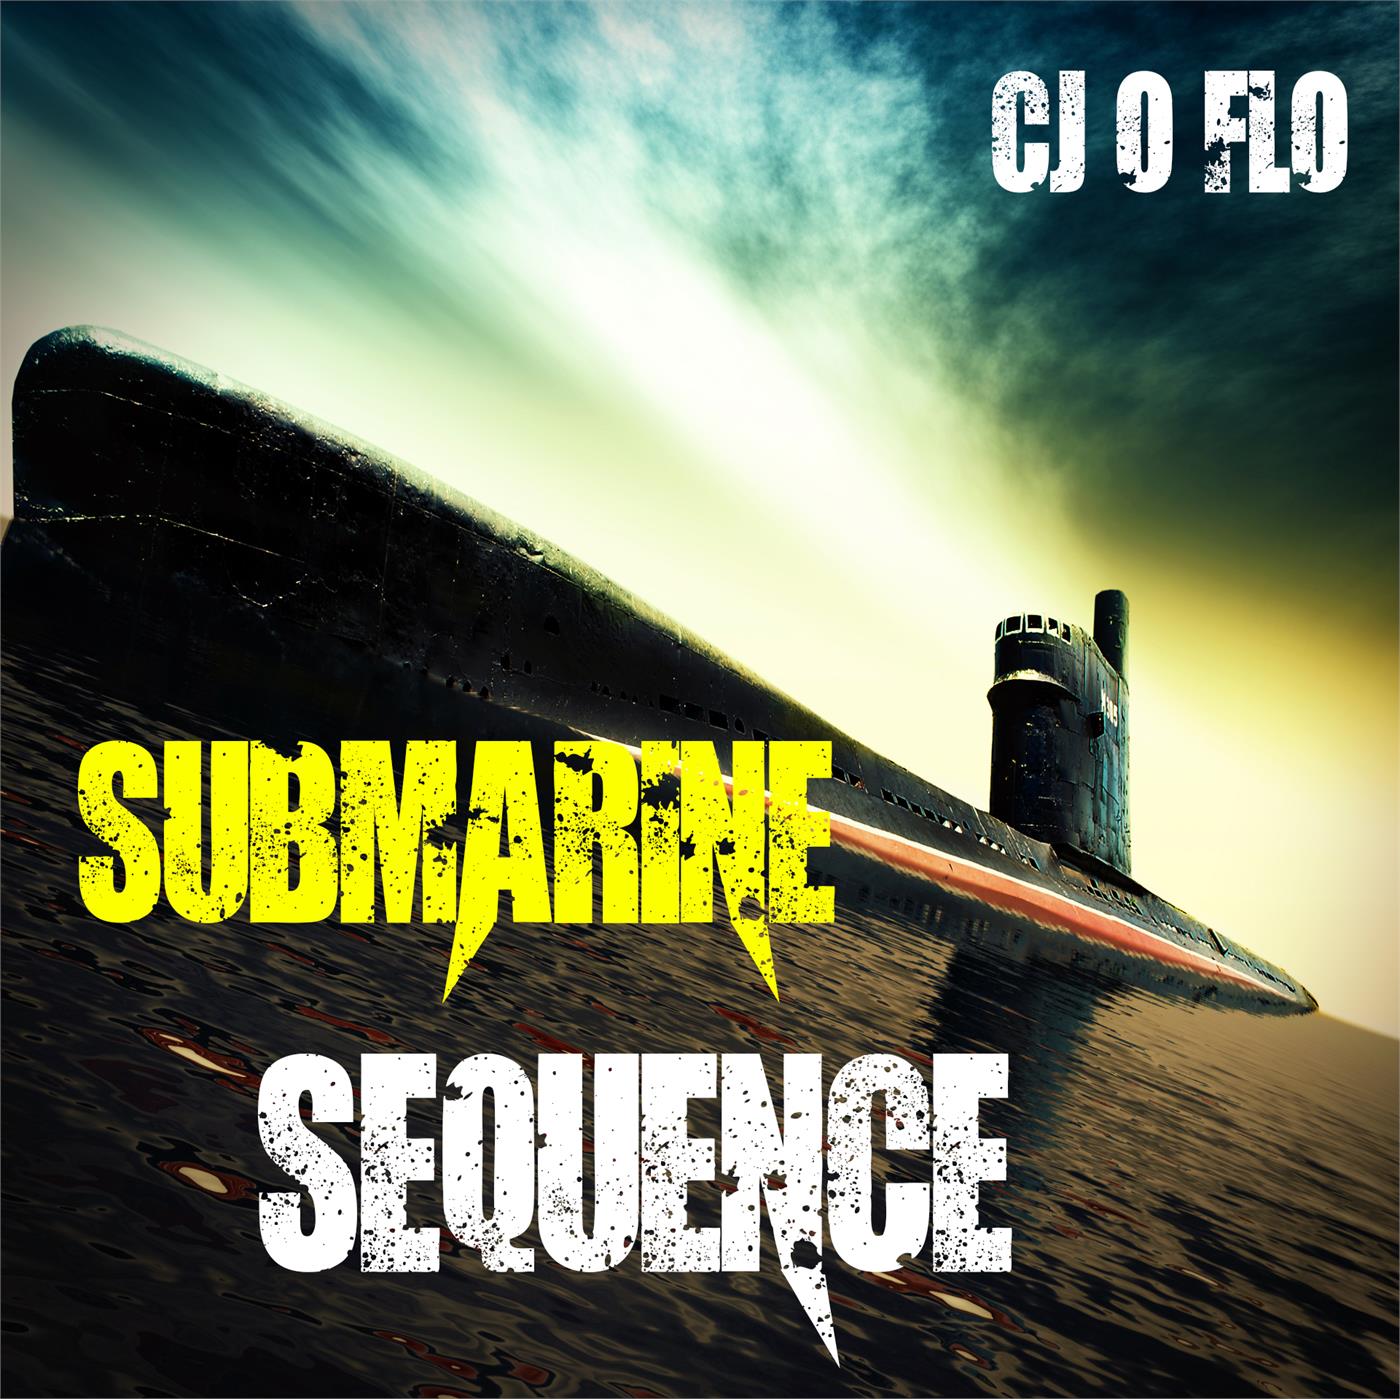 Submarine Sequence